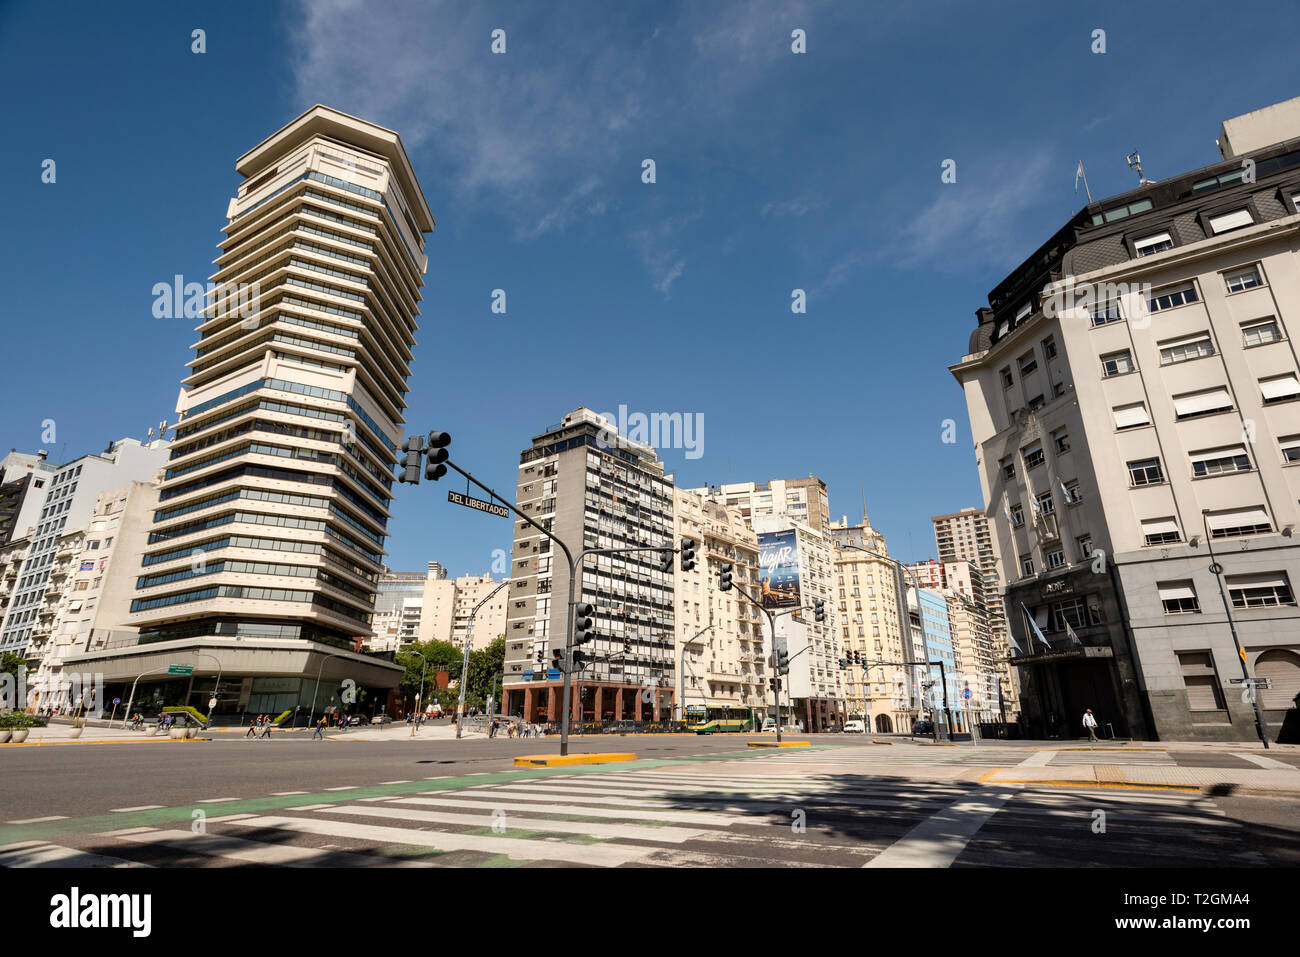 Kreuzung in Retiro Gegend von Buenos Aires, Argentinien. Avenida Del Libertador und Avenue Dr. Jose Maria Ramos Mejia. Stockfoto